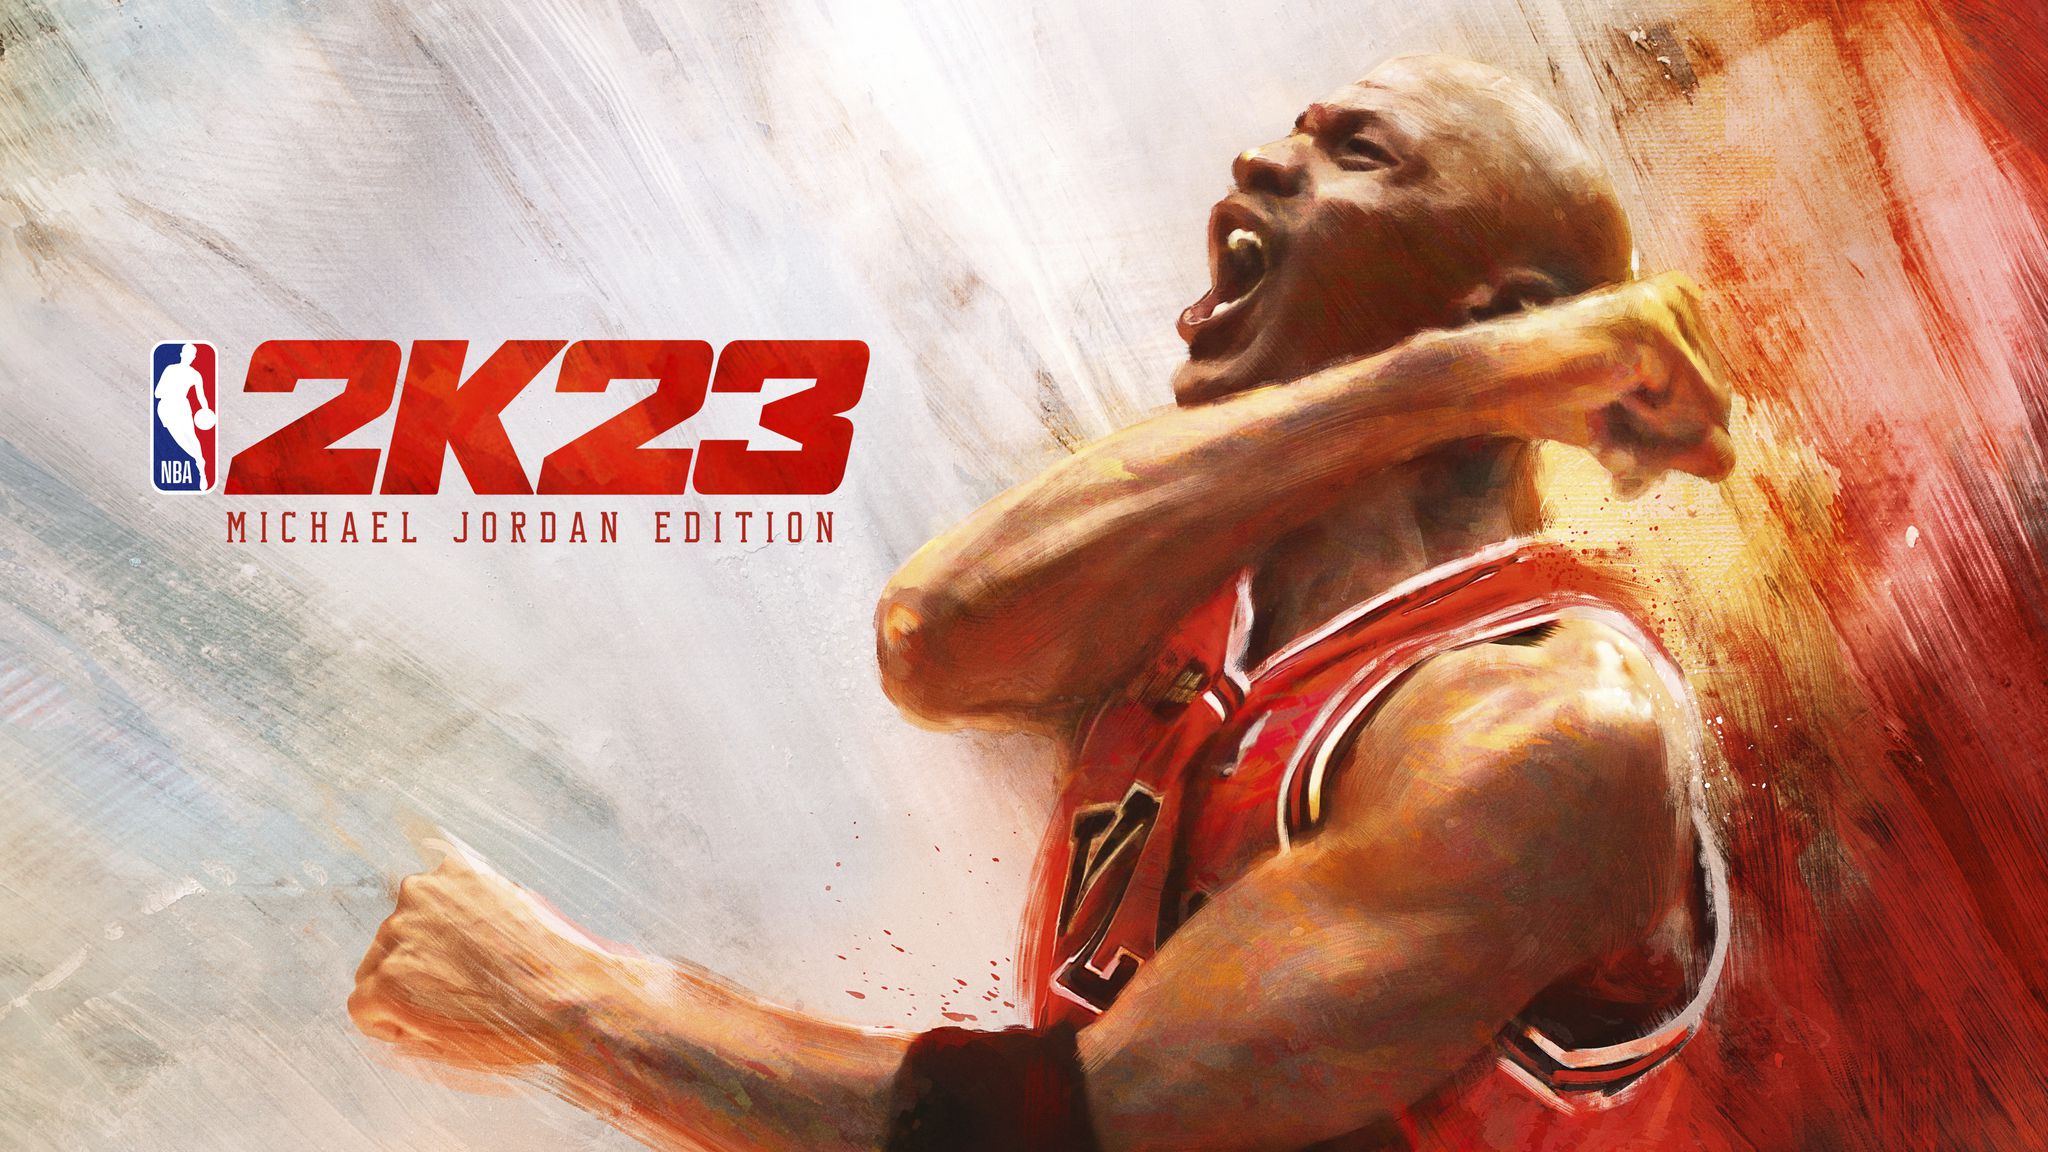 Jogo - Xbox - NBA 2k22 - Series X - Microsoft